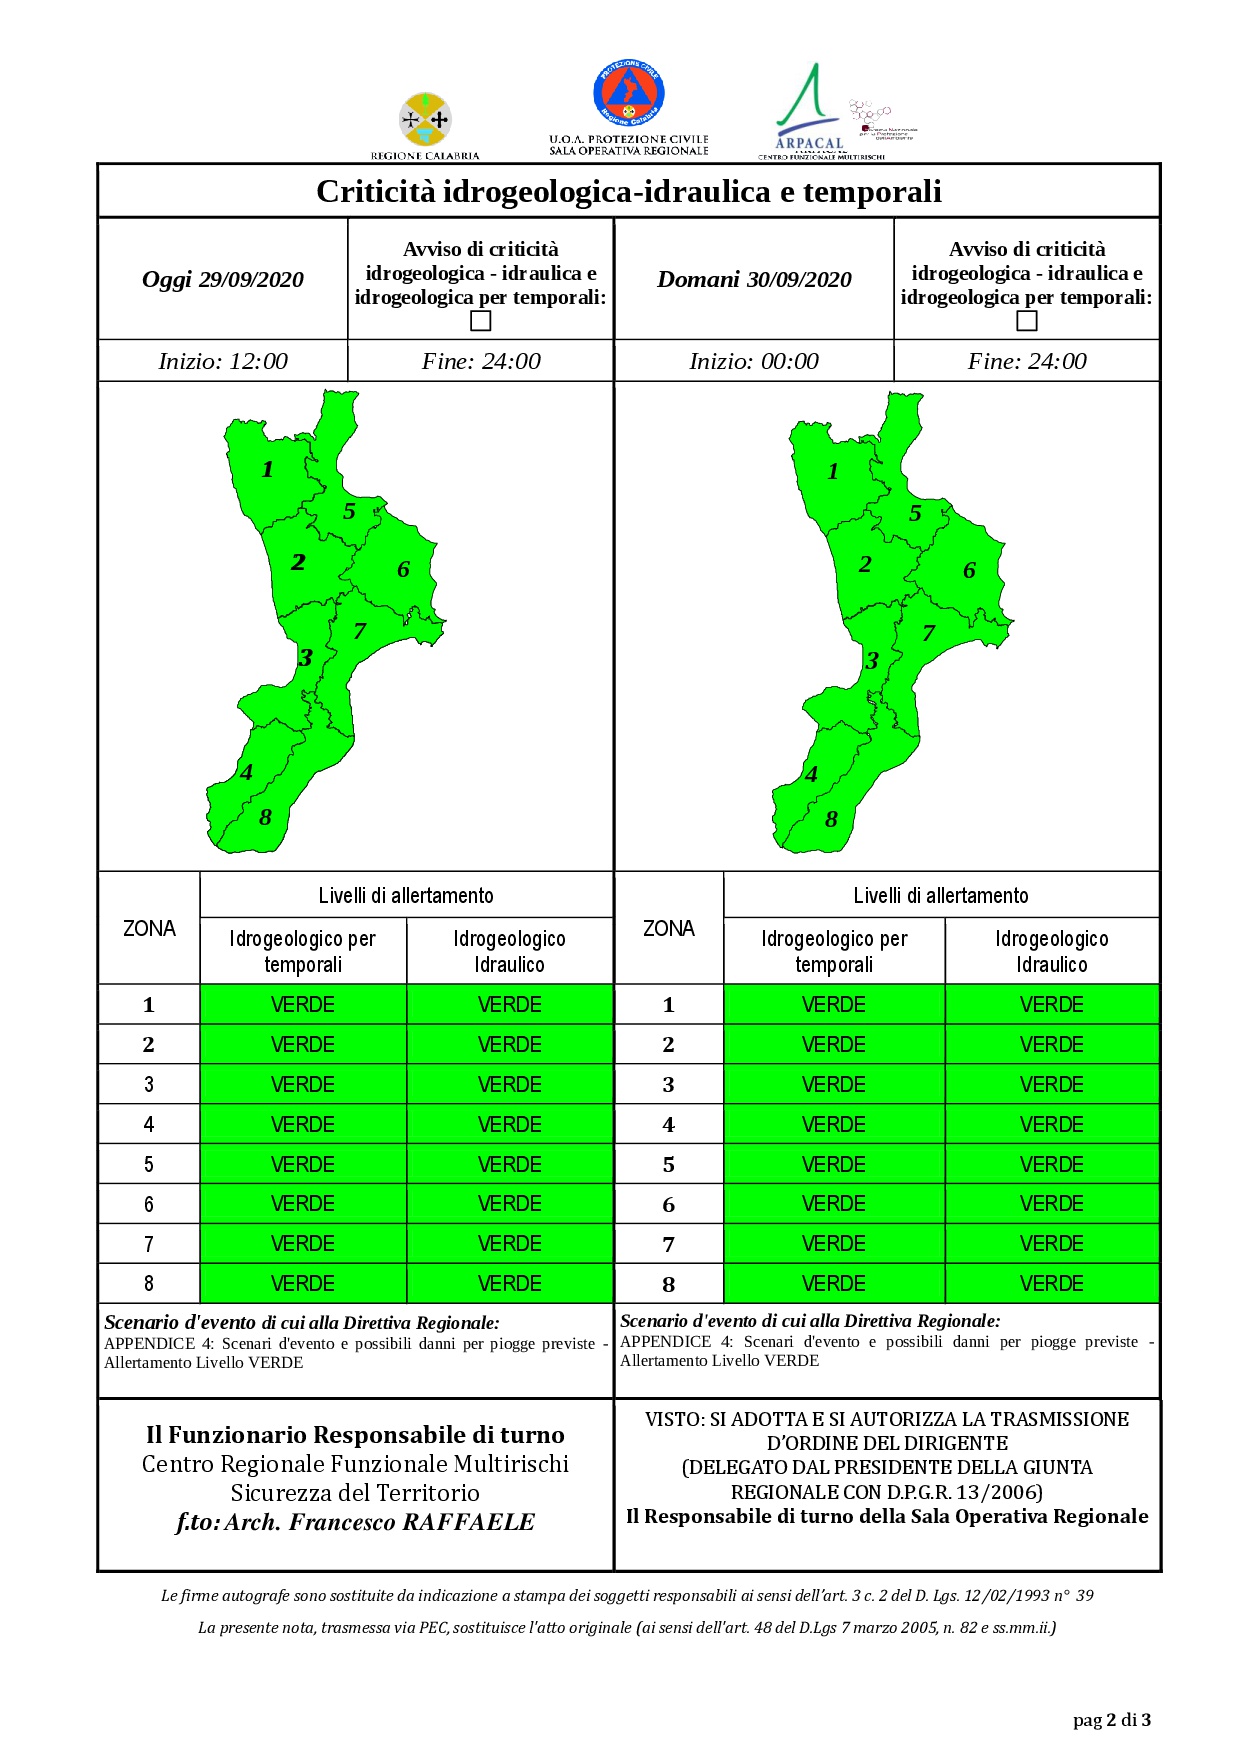 Criticità idrogeologica-idraulica e temporali in Calabria 29-09-2020